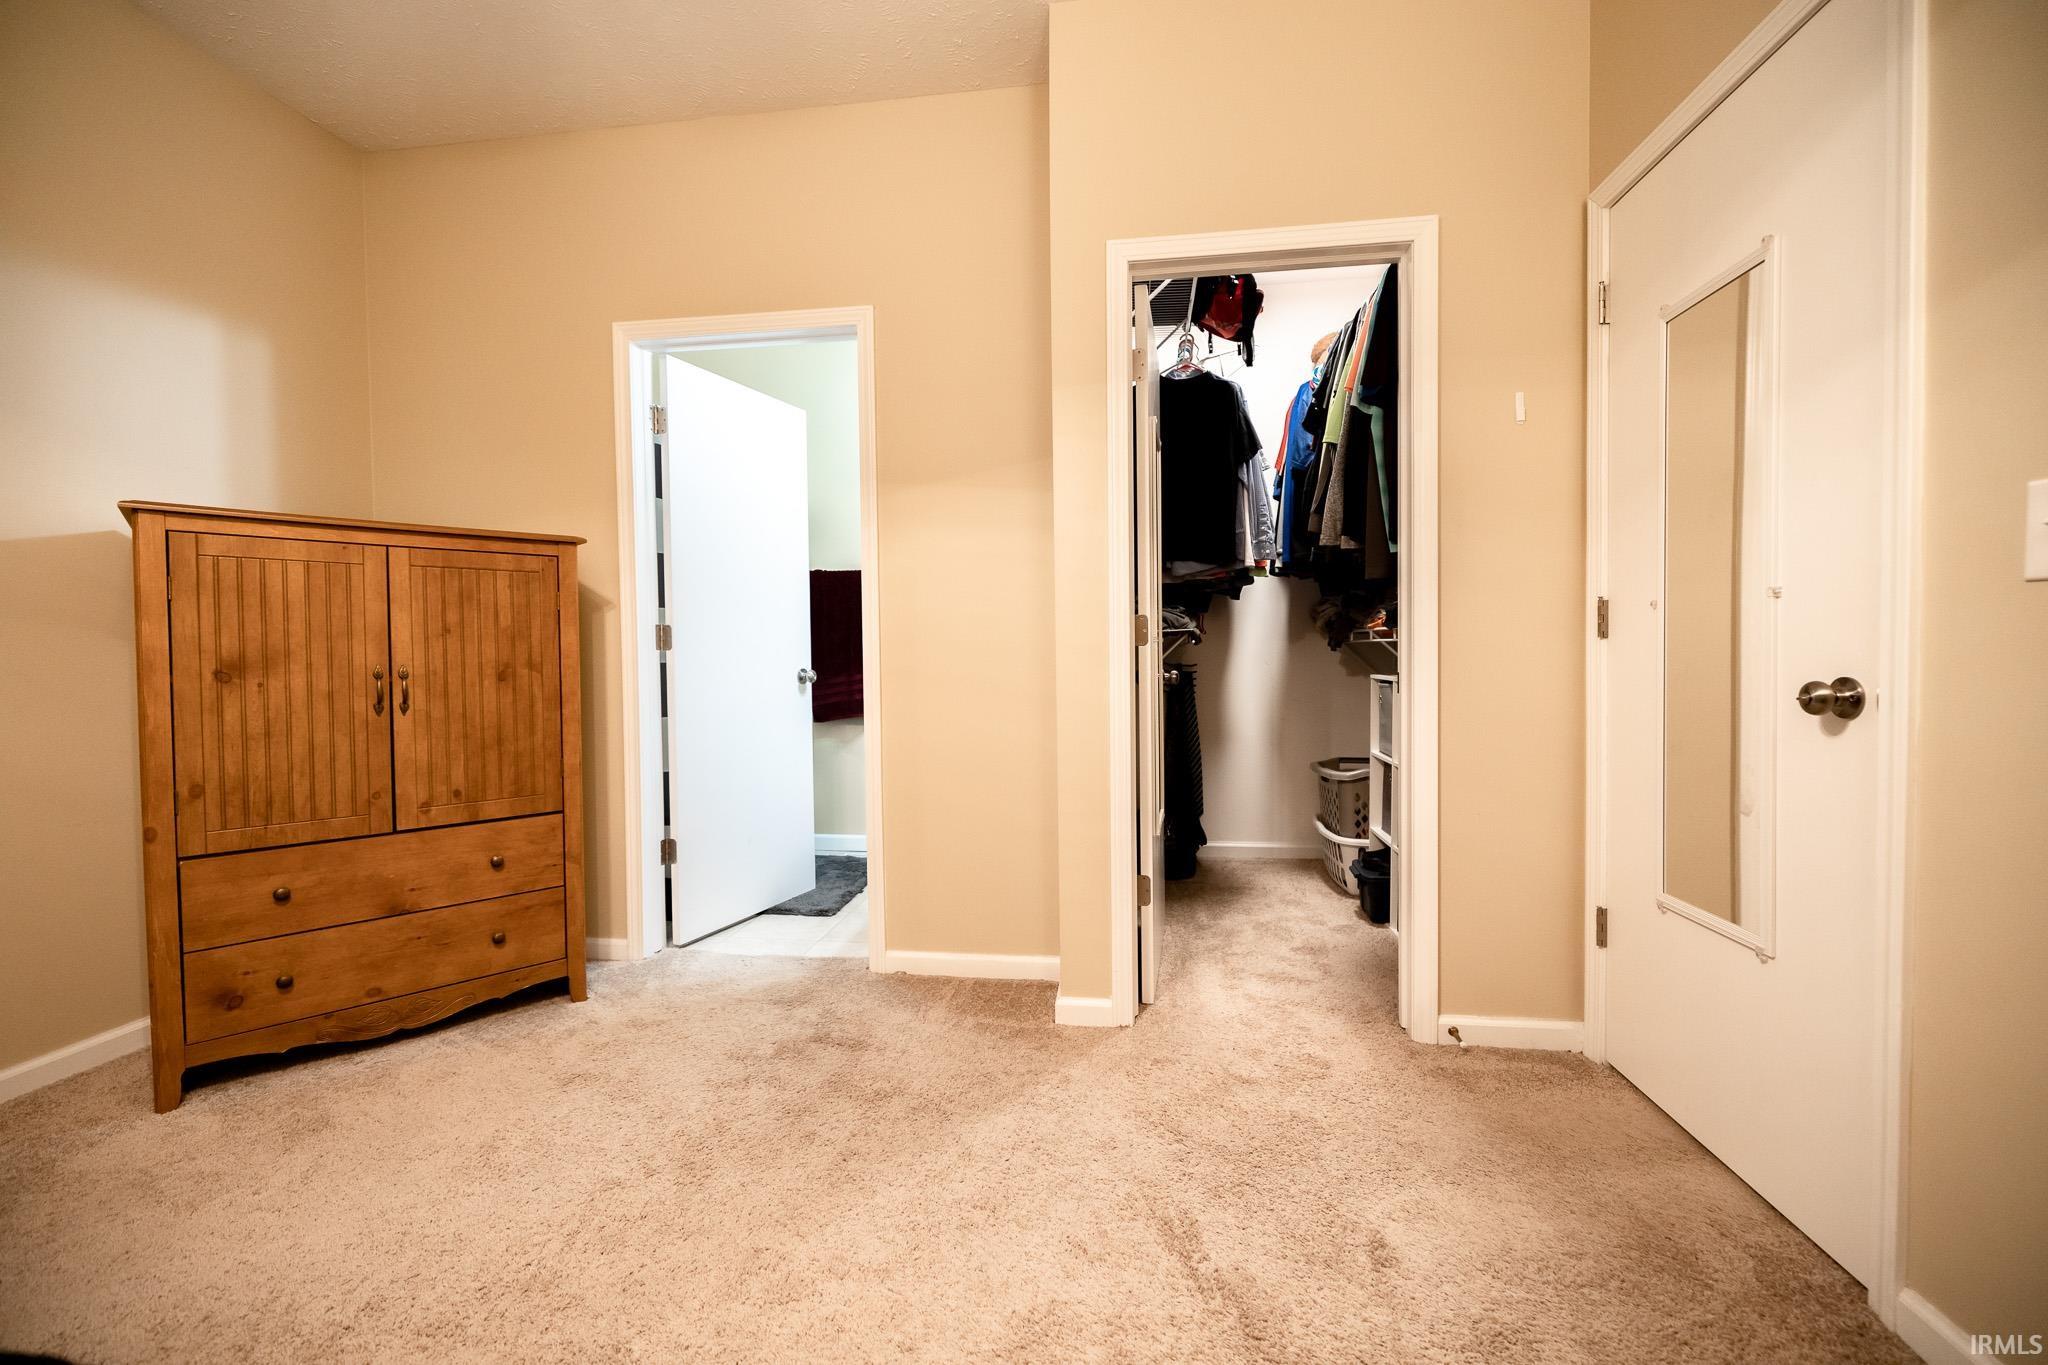 View of Walk-In Closet.